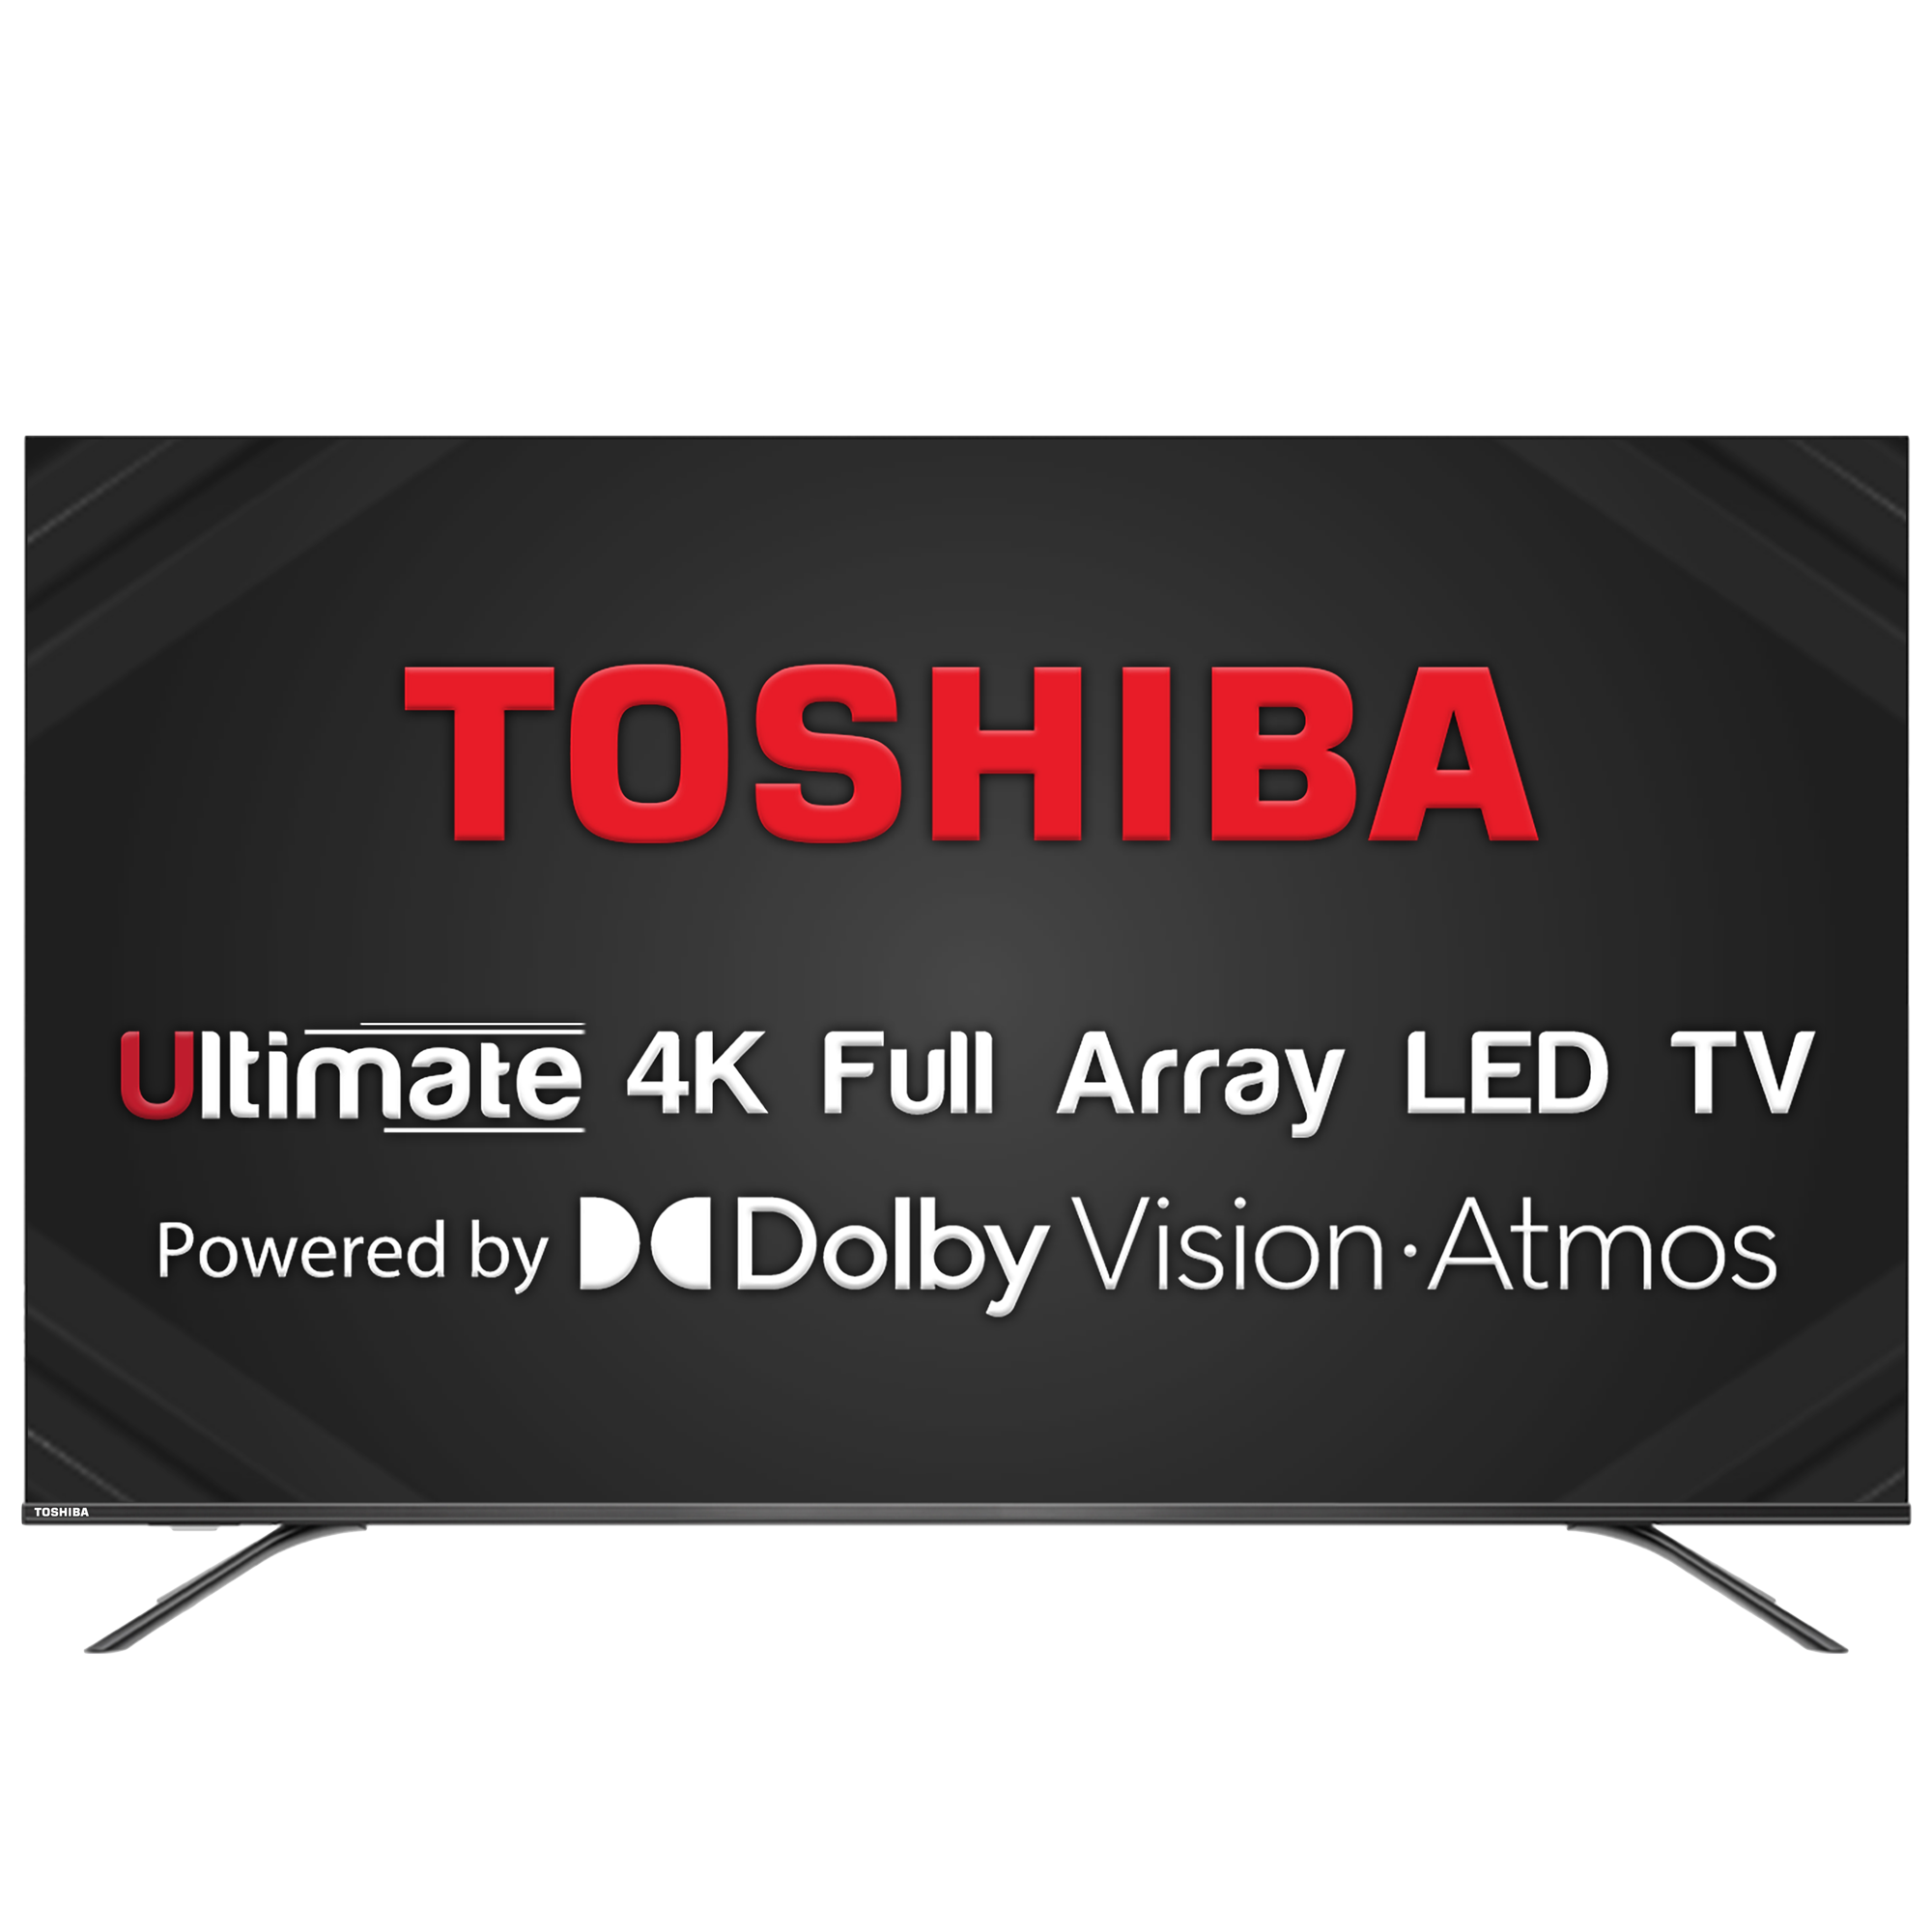 Toshiba U7980 Series 164cm (65 Inch) Ultra HD 4K LED Smart TV (3 Years Warranty, Screen Mirroring, 65U7980, Black)_1